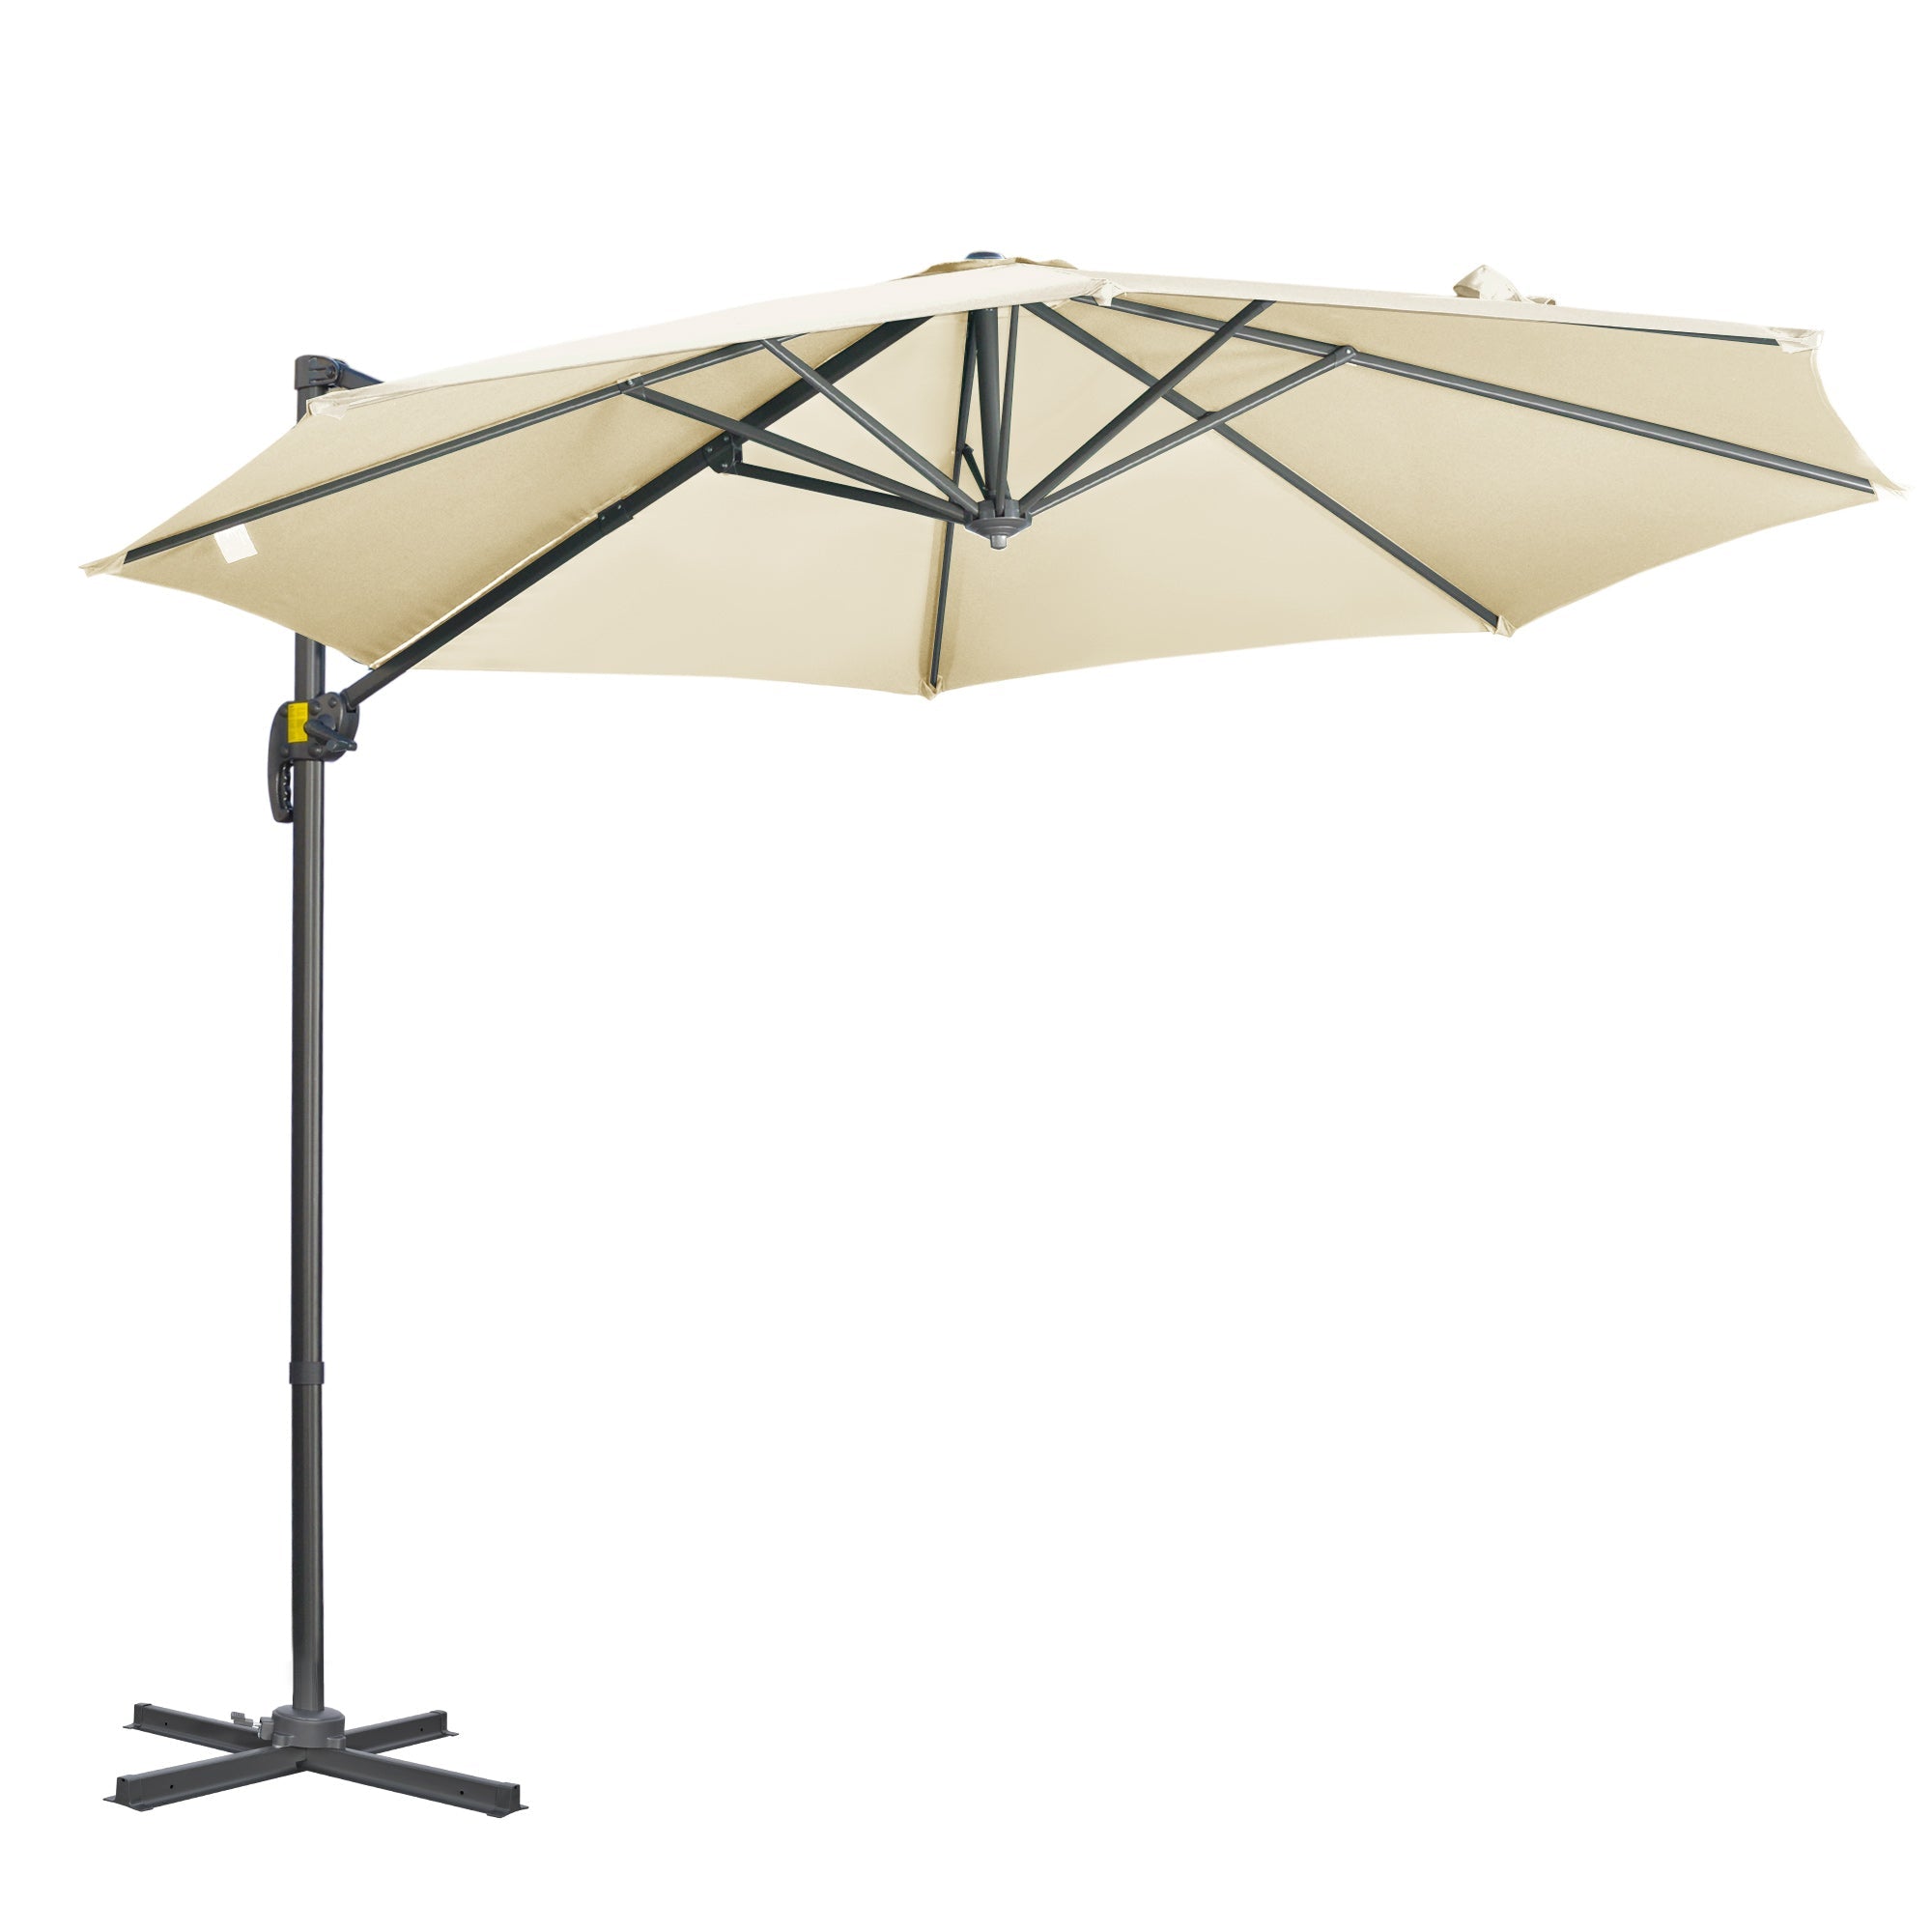 3 x 3(m) Cantilever Parasol with Cross Base, Garden Umbrella with 360° Rotation, Crank Handle and Tilt for Outdoor, Patio, Cream White-0